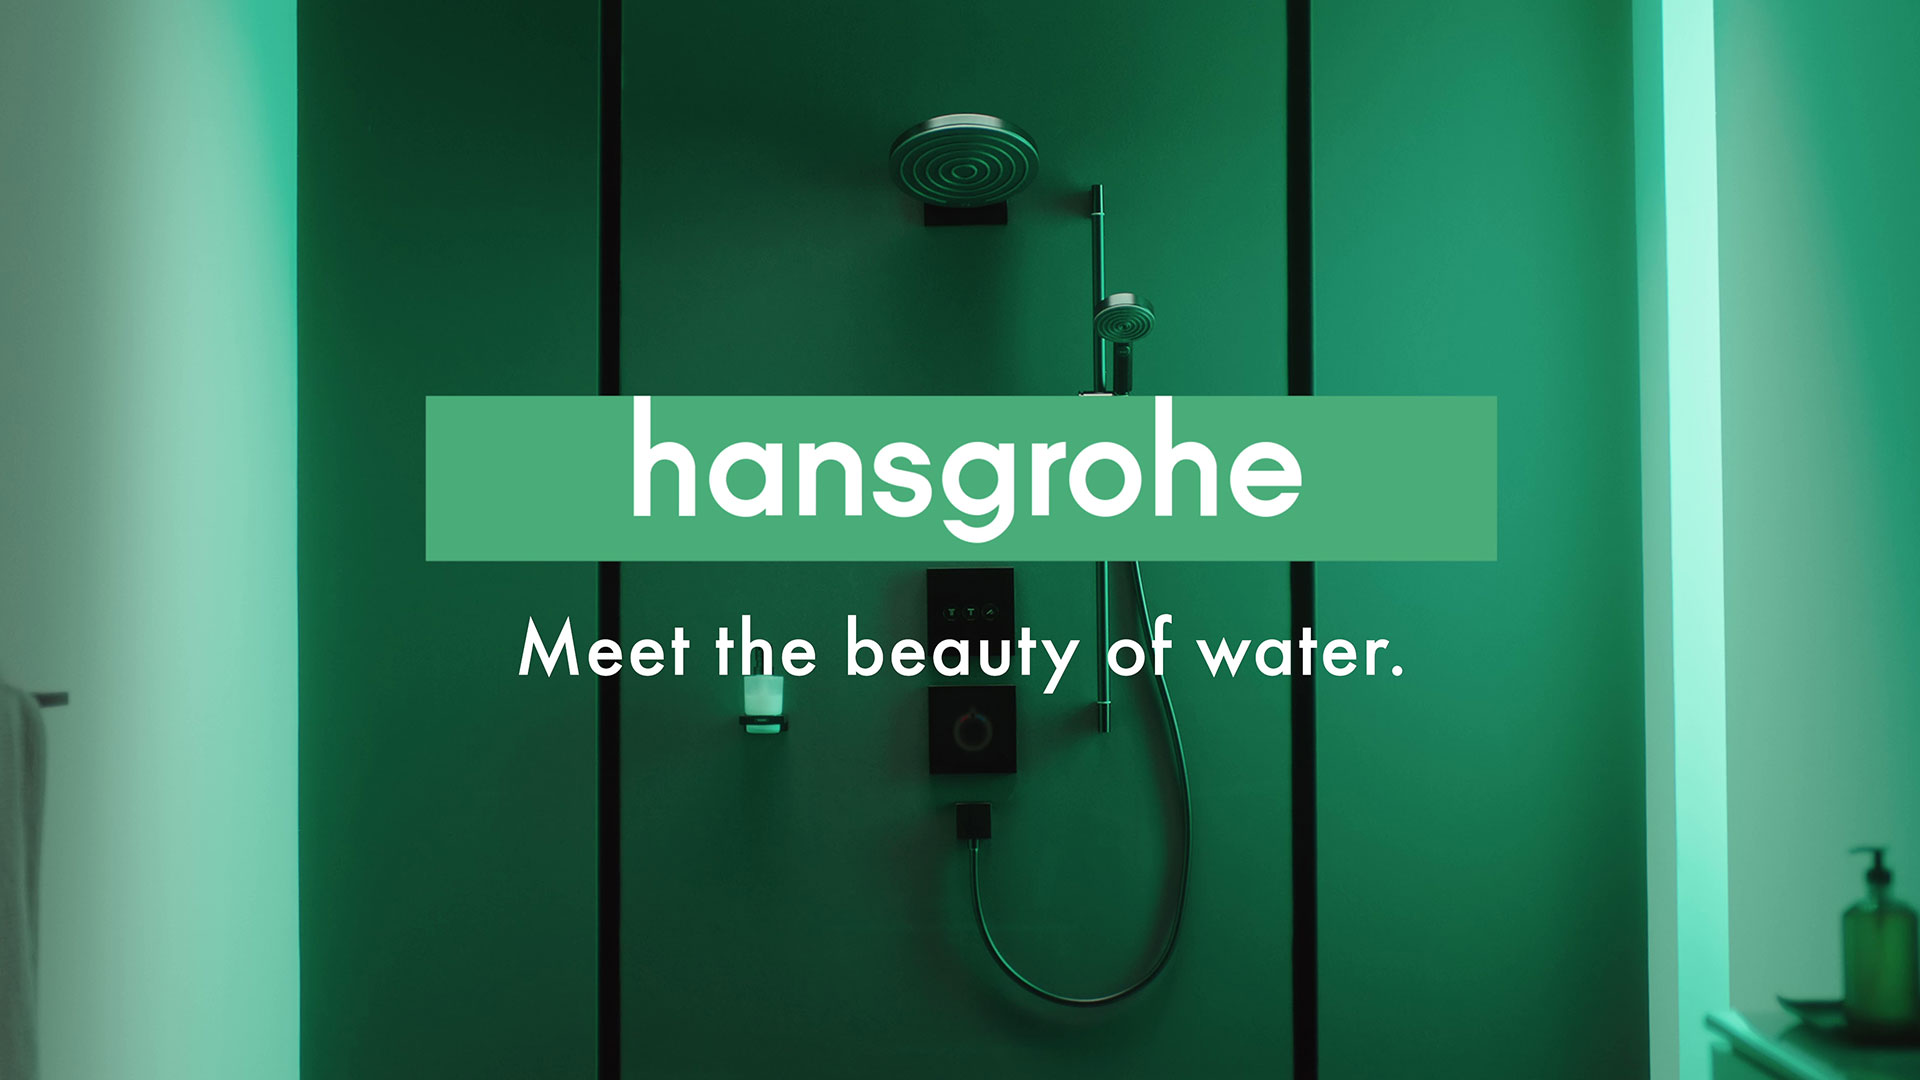 Hansgrohe - Bathroom Brands in India